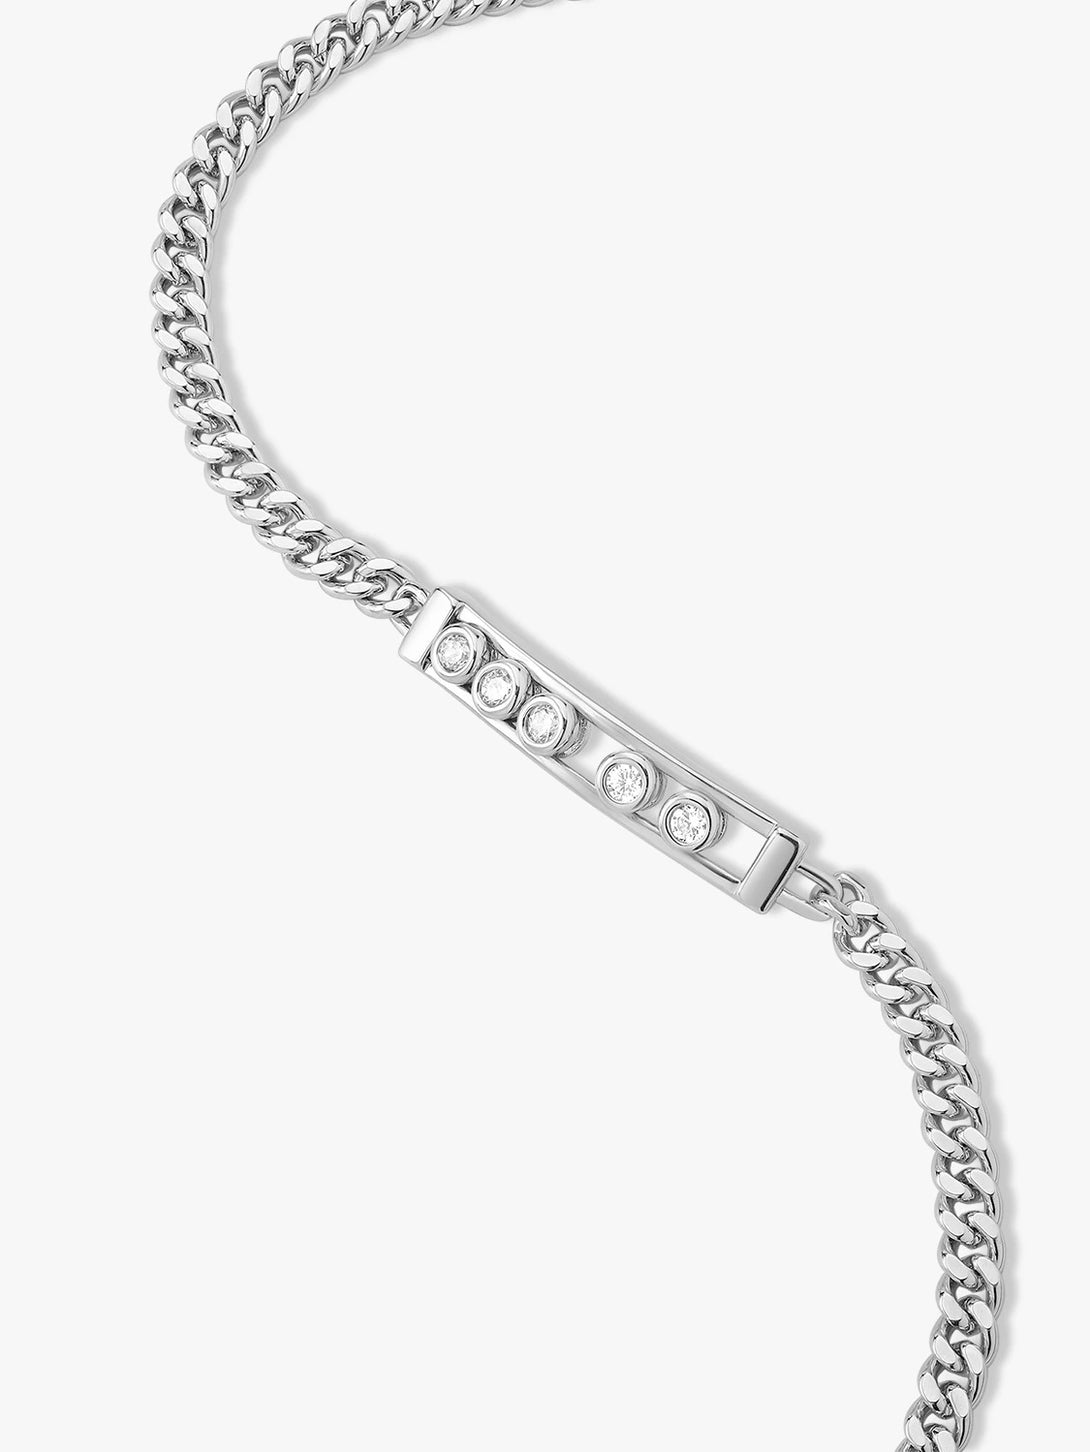 Delicate Charm Bracelet - OOTDY